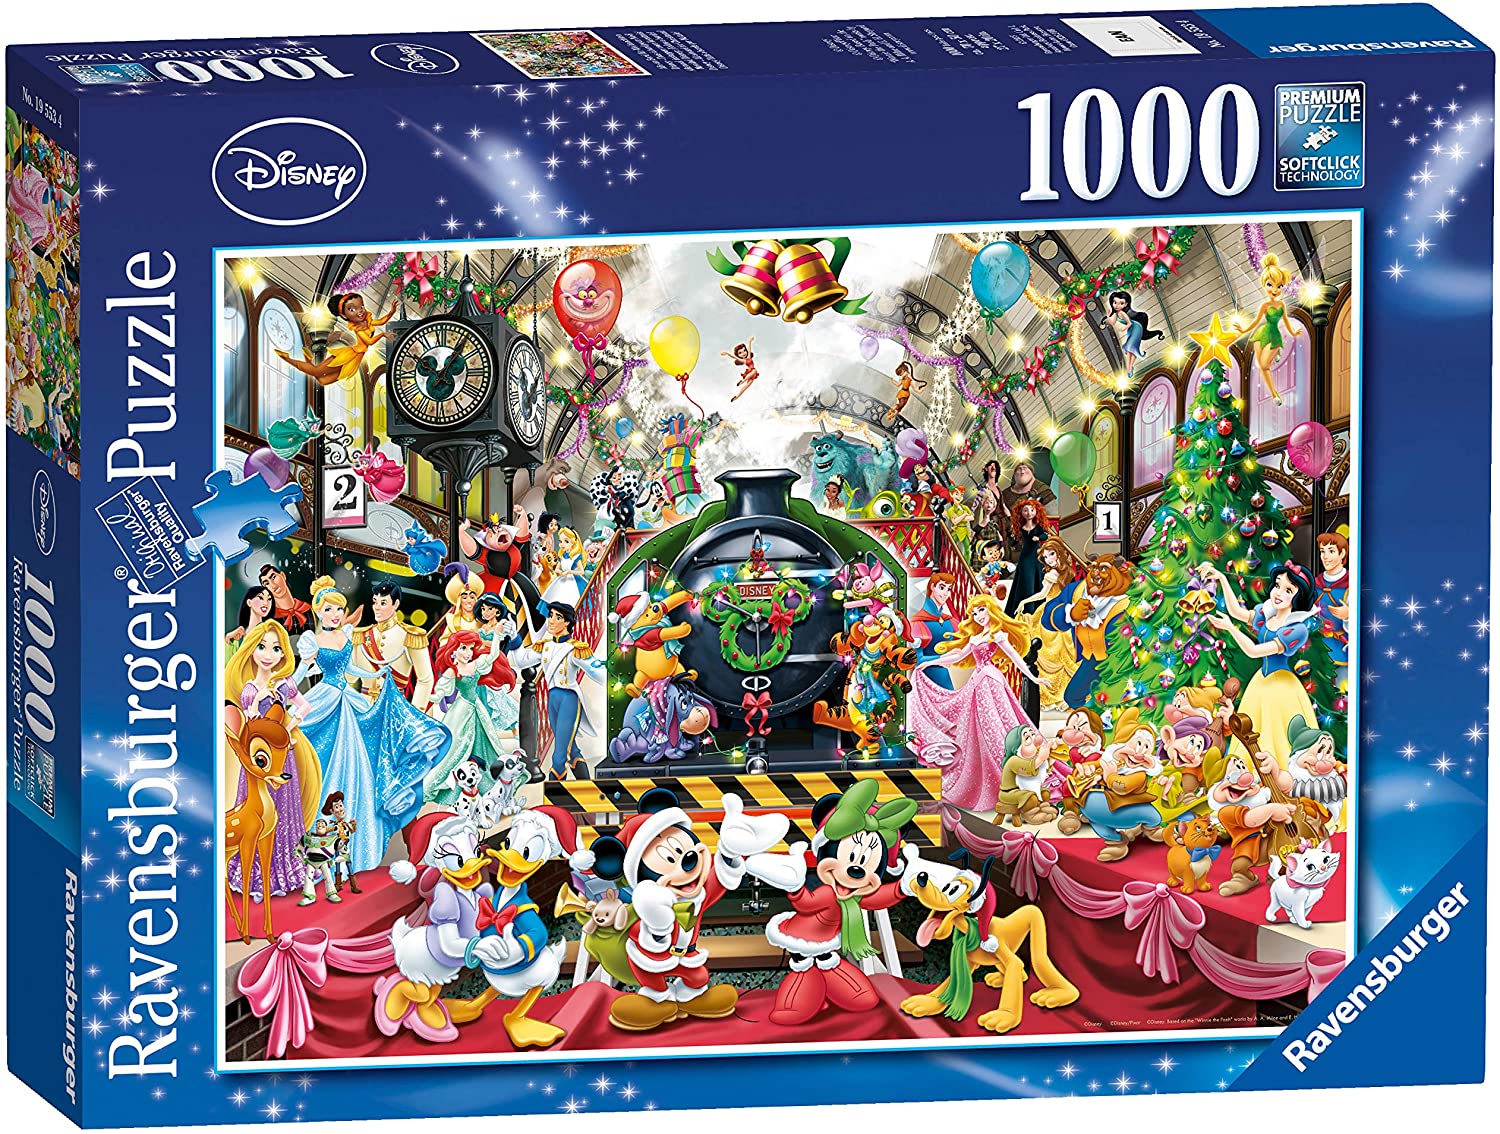 Ravensburger Disney Carnival 1000 piece jigsaw puzzle 19383 NEW 